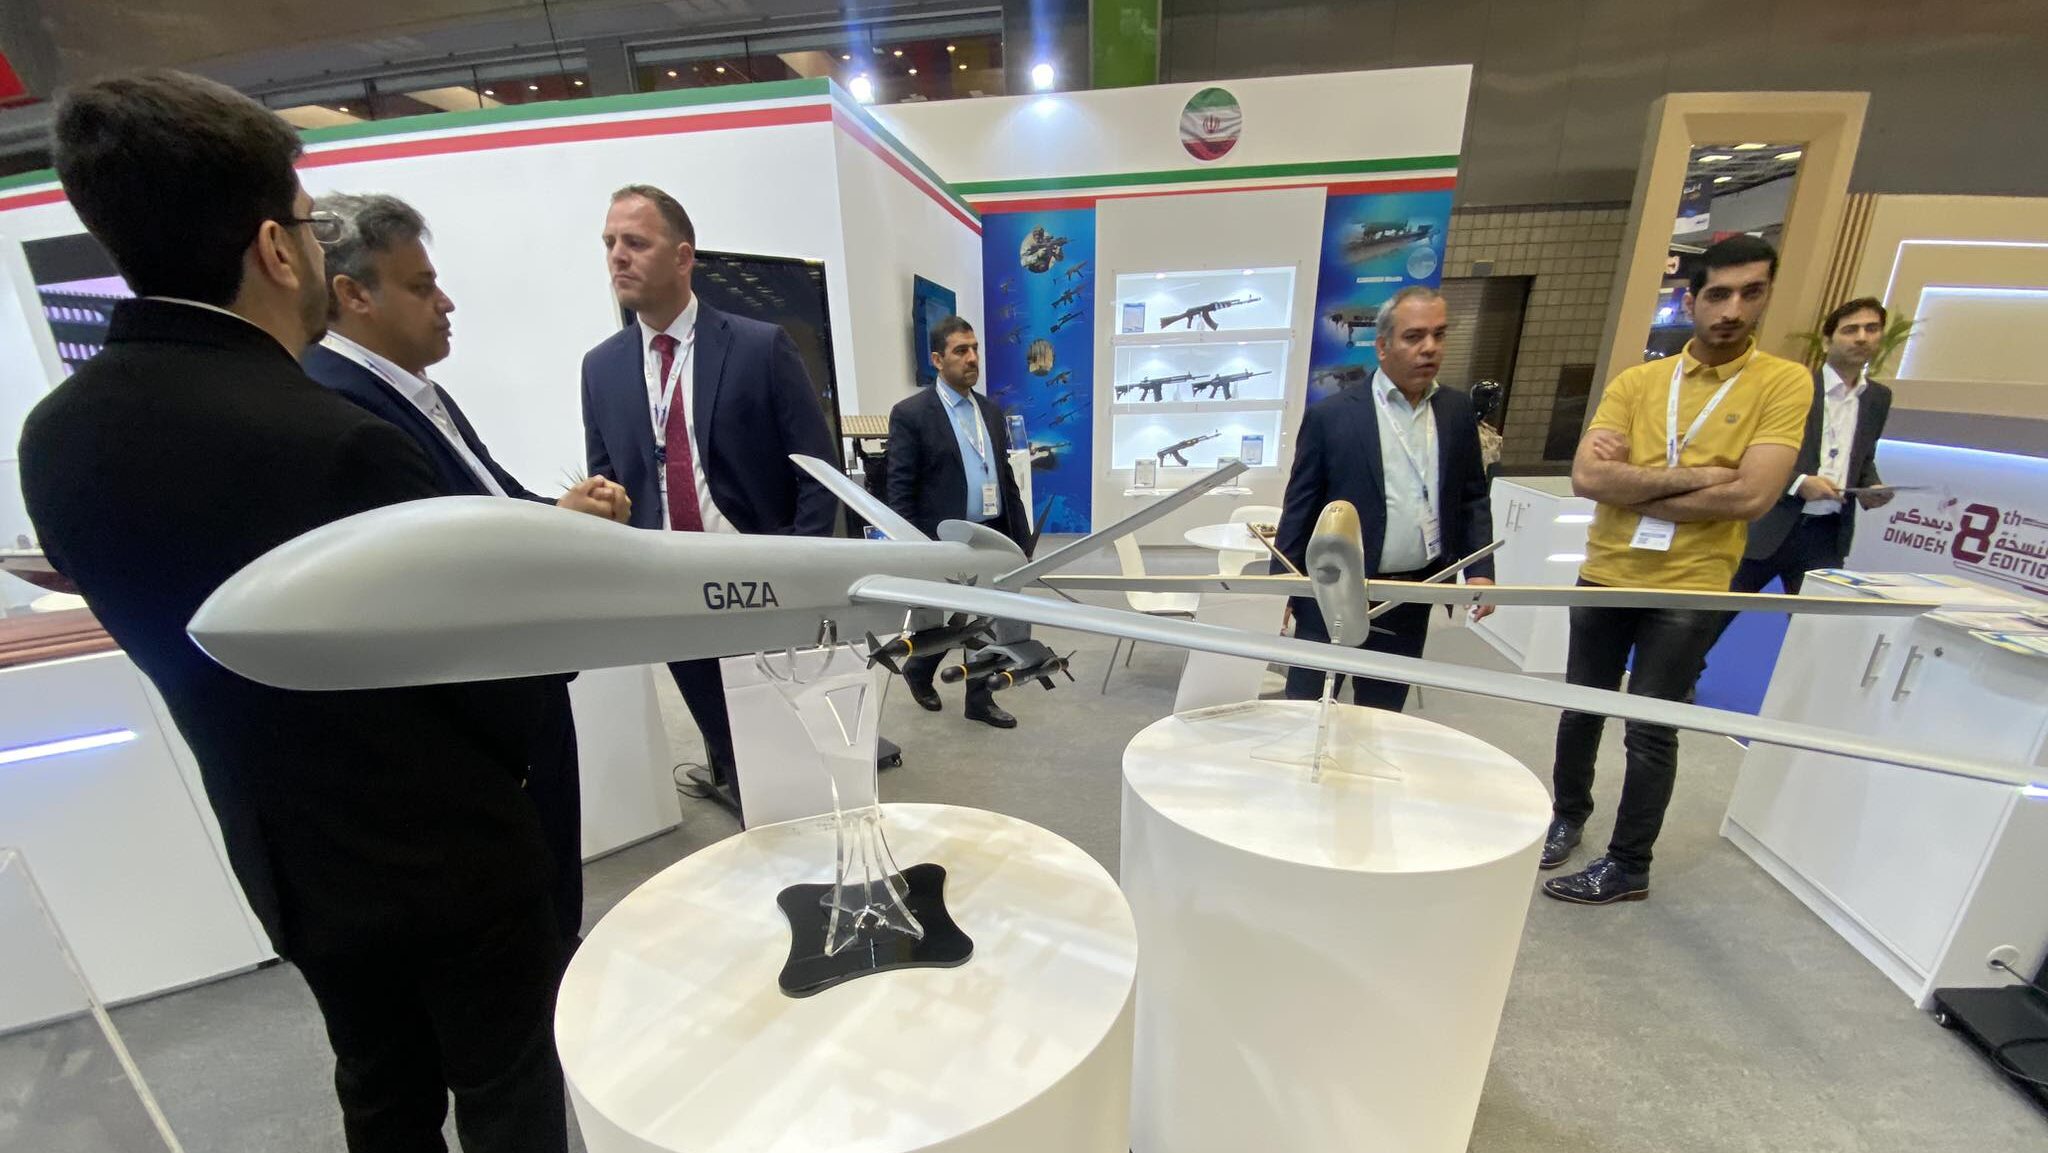 Iranian UAV dubbed "Gaza" at Qatar defense show.